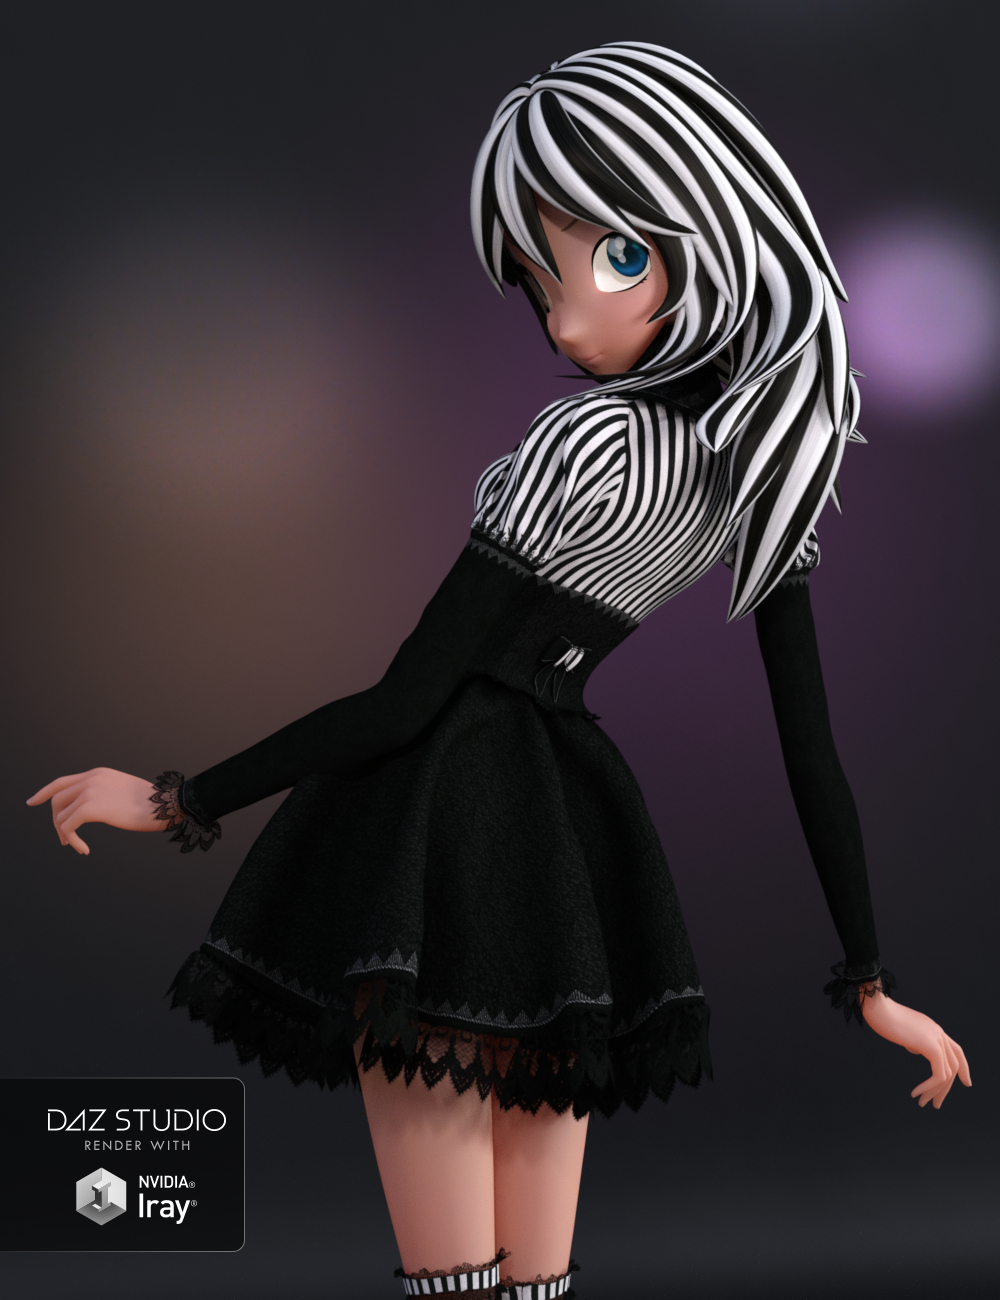 DG Toon Style Hair Shaders by: IDG DesignsDestinysGarden, 3D Models by Daz 3D